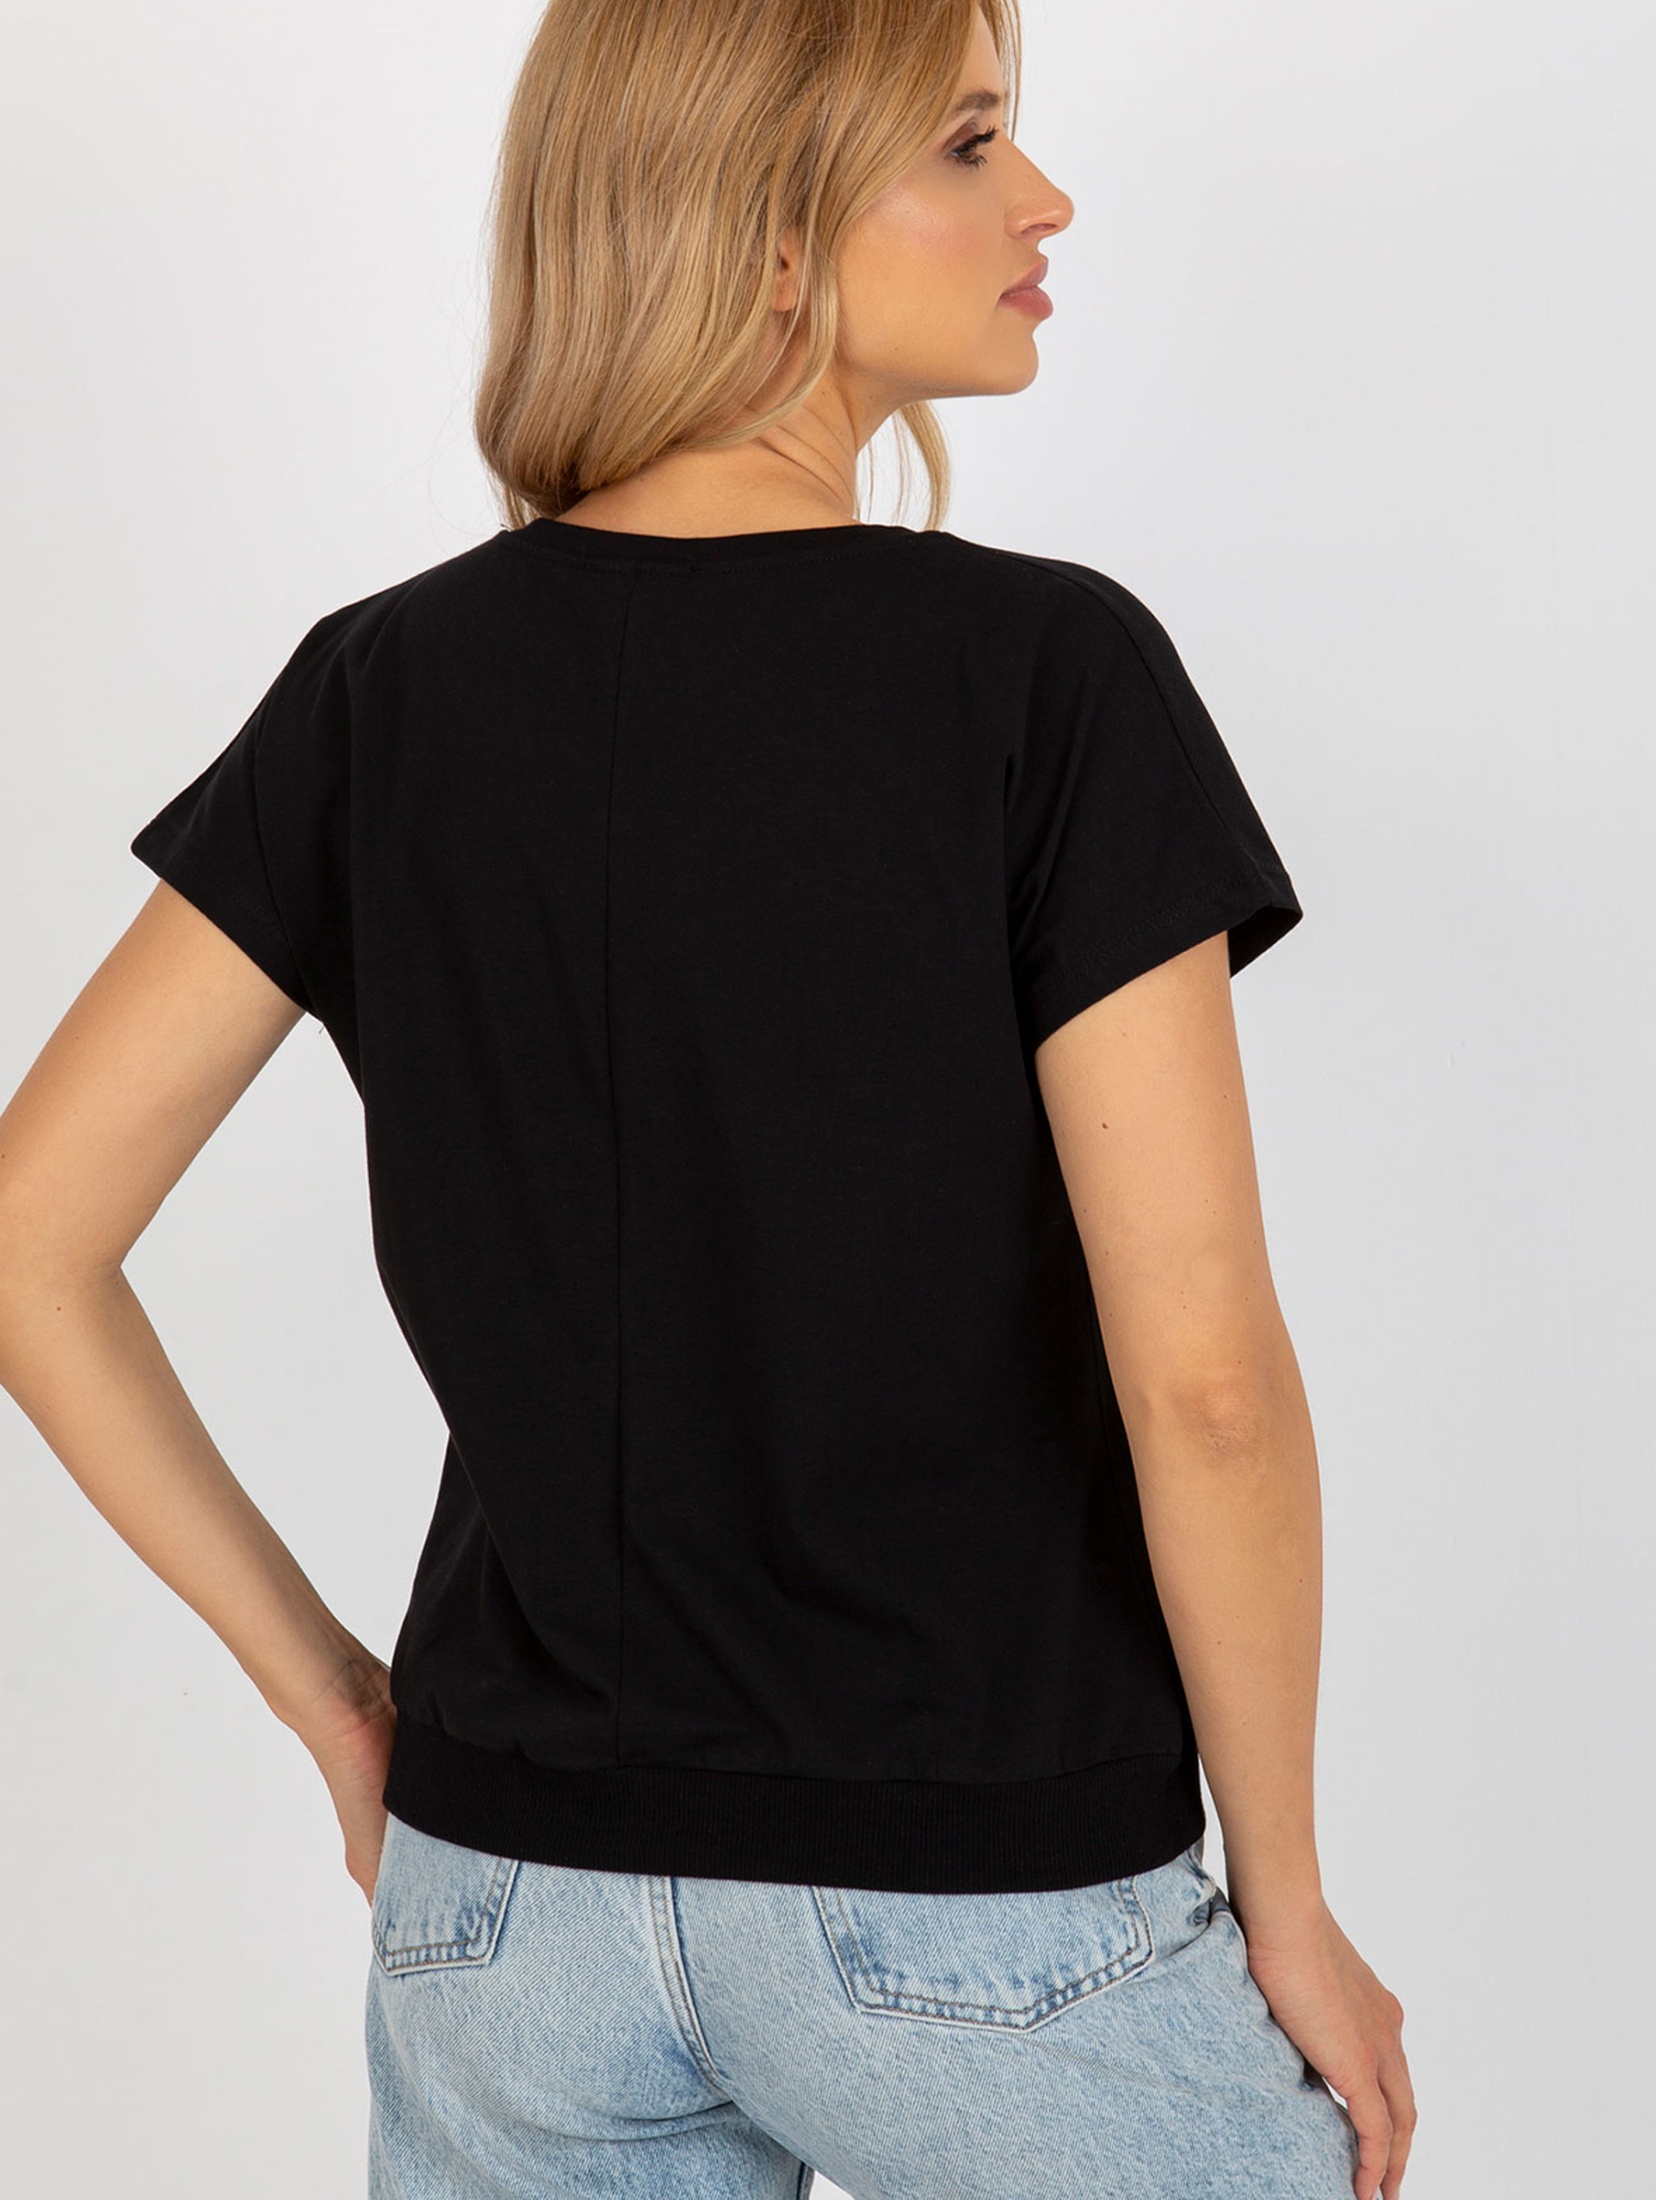 Czarna damska bluzka z nadrukiem RUE PARIS